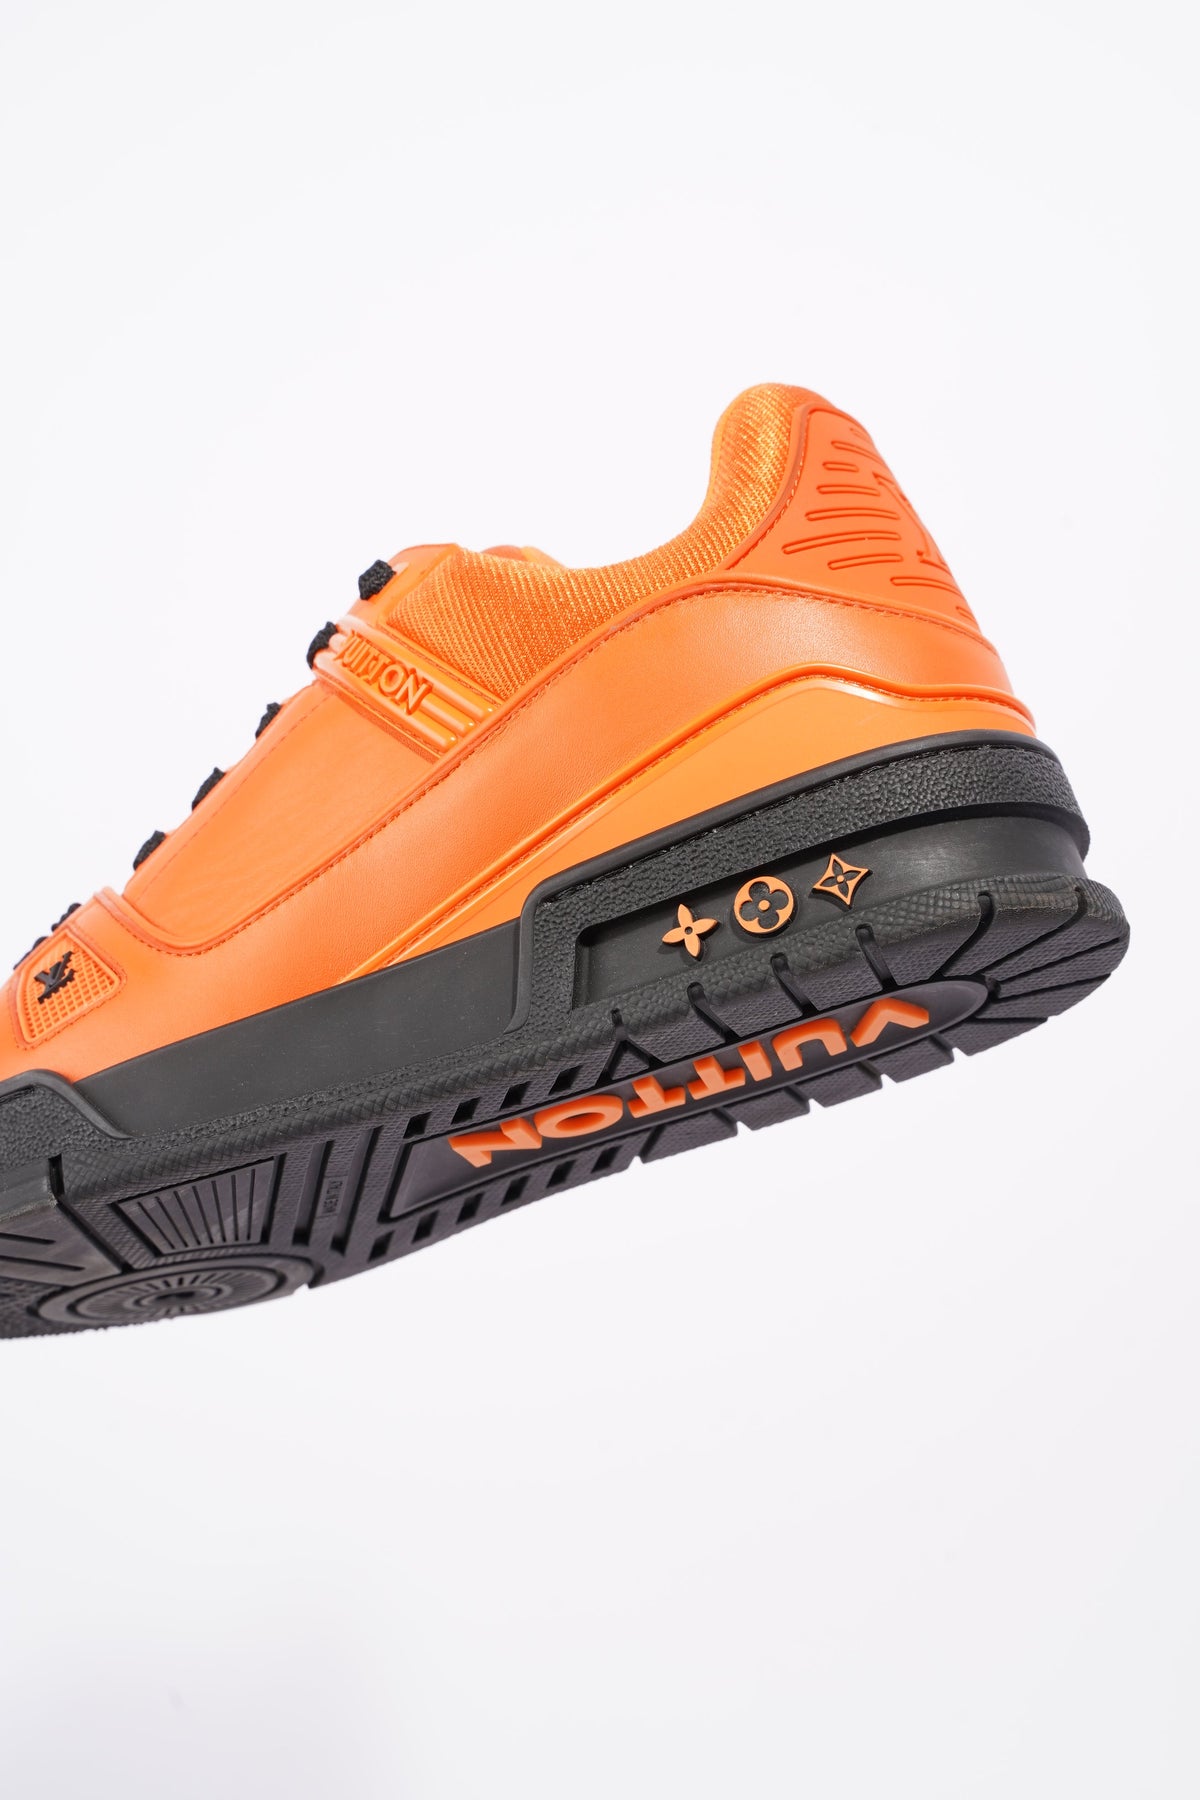 Louis Vuitton Trainer MCA Sneakers - Orange Sneakers, Shoes